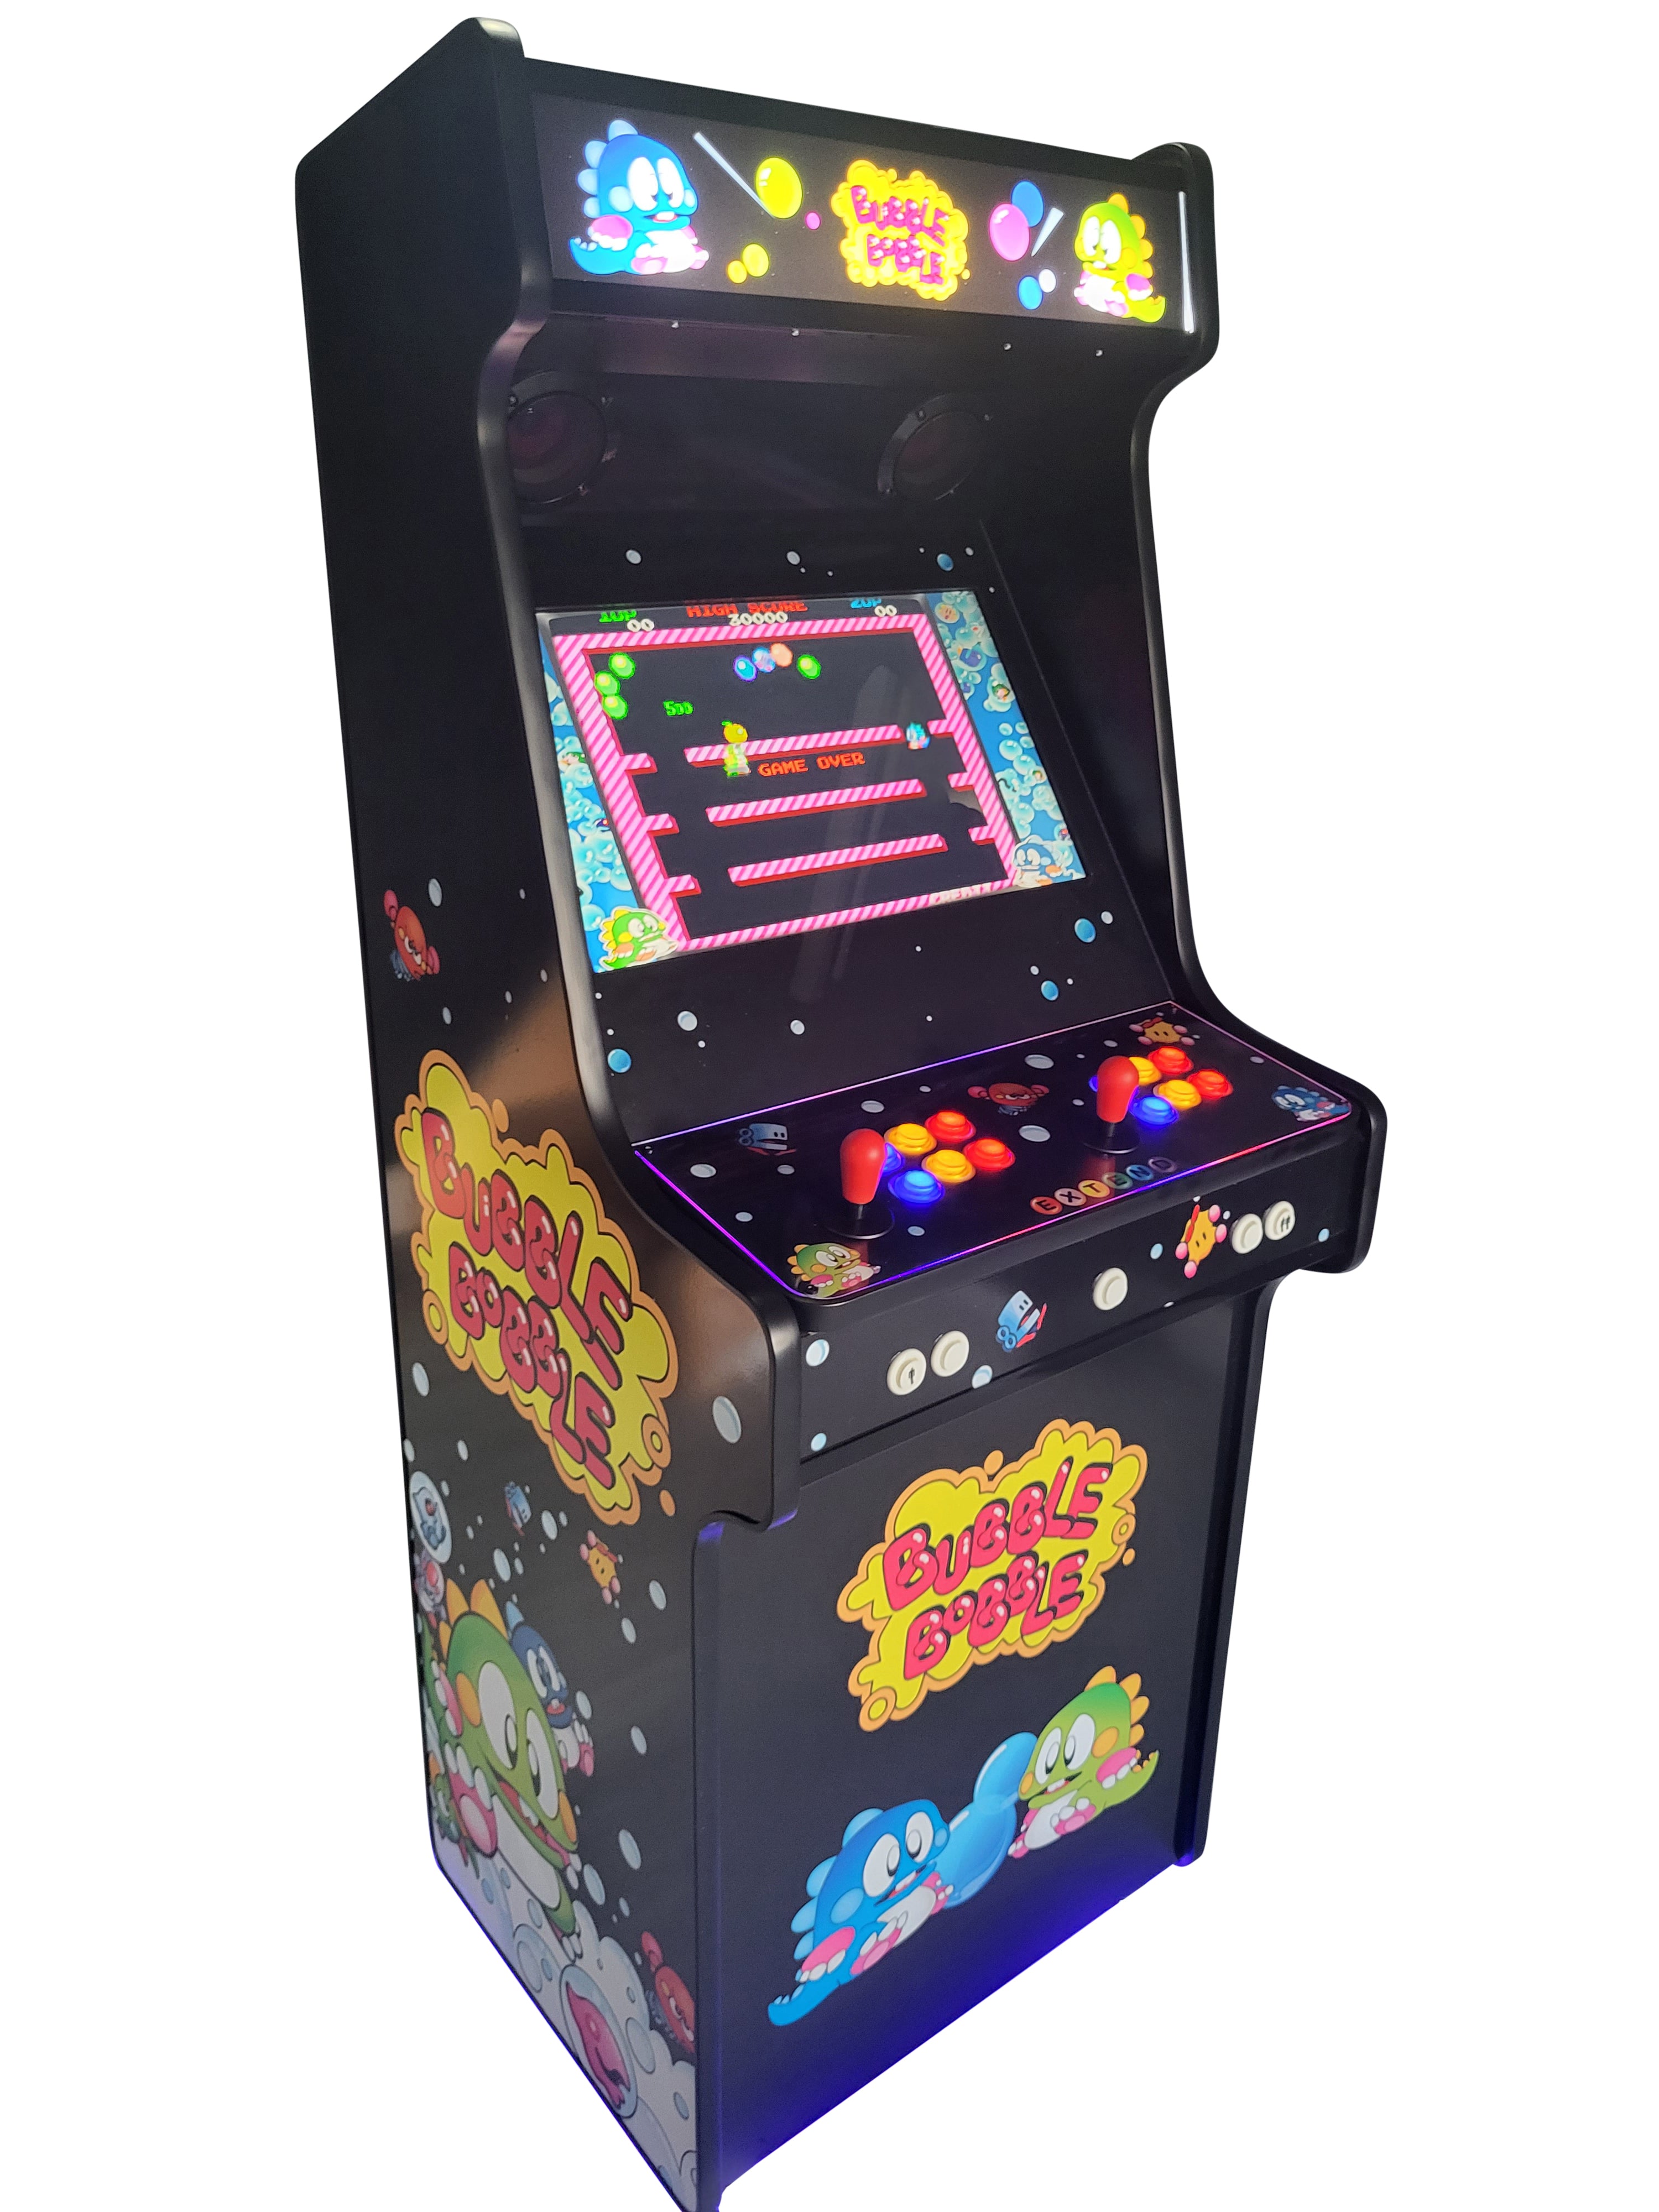 Bubble Bobble Arcade Machine for sale - 15,000 games - Bubble Bobble ...